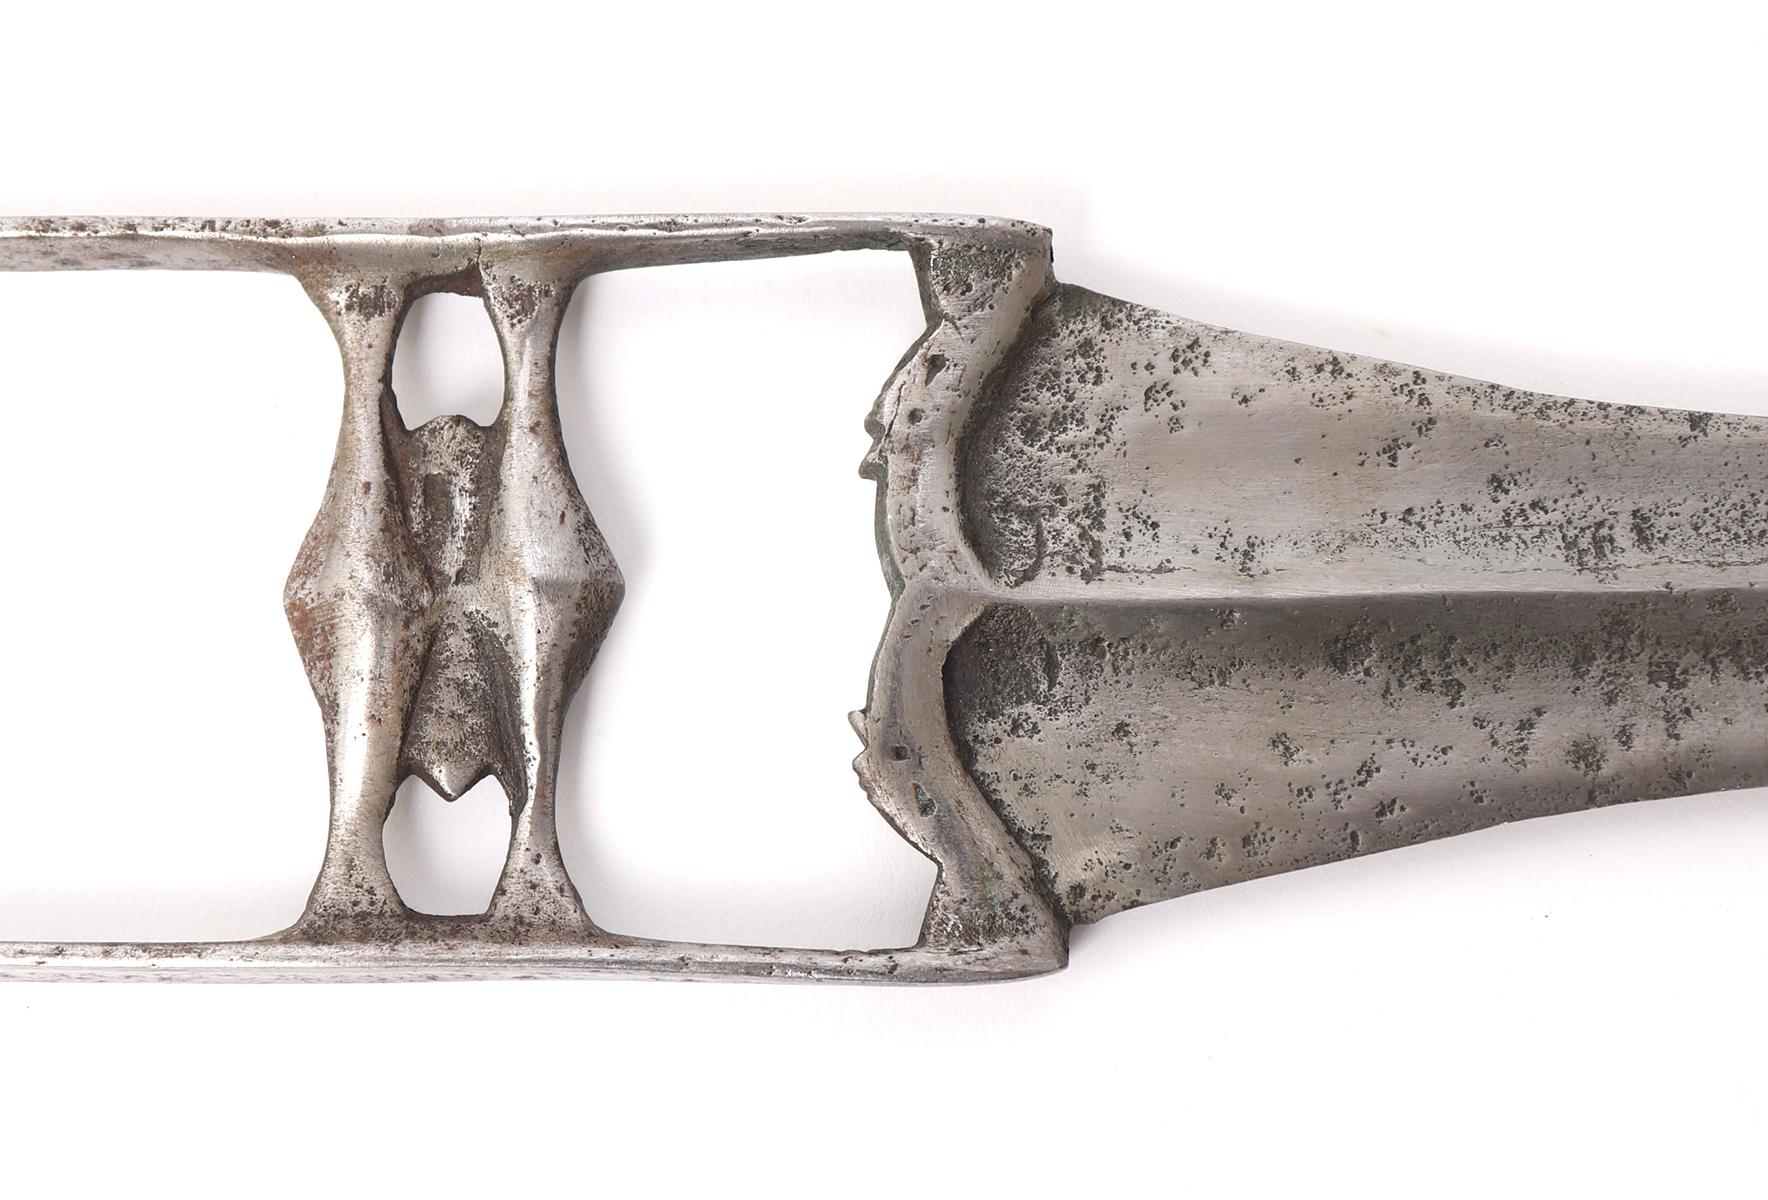 Indian Katar Punch Dagger, 18th/19th c.